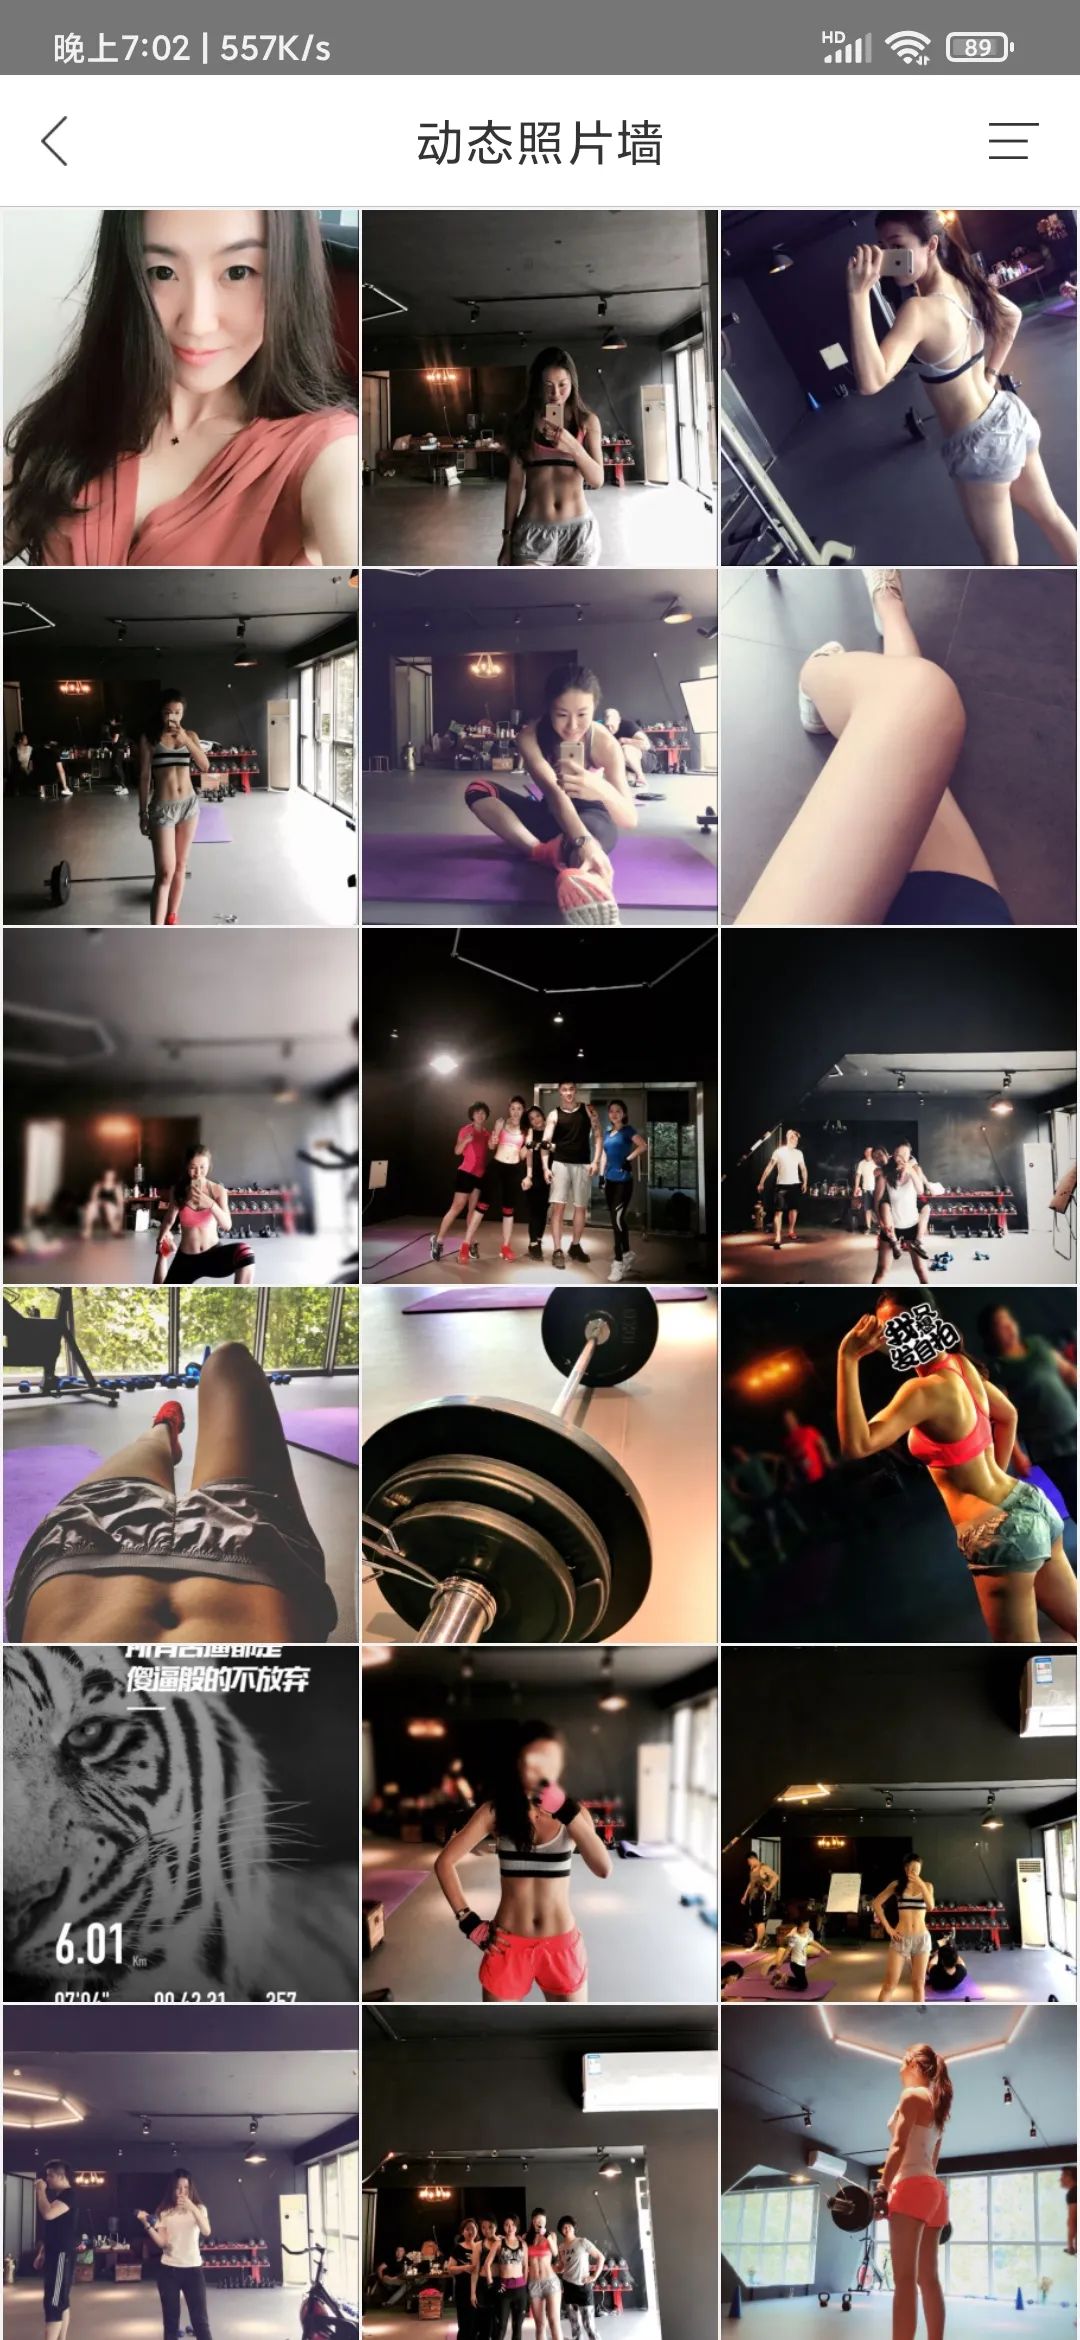 FltTime健身app，健身课程全解锁，轻松练就一身肌肉！